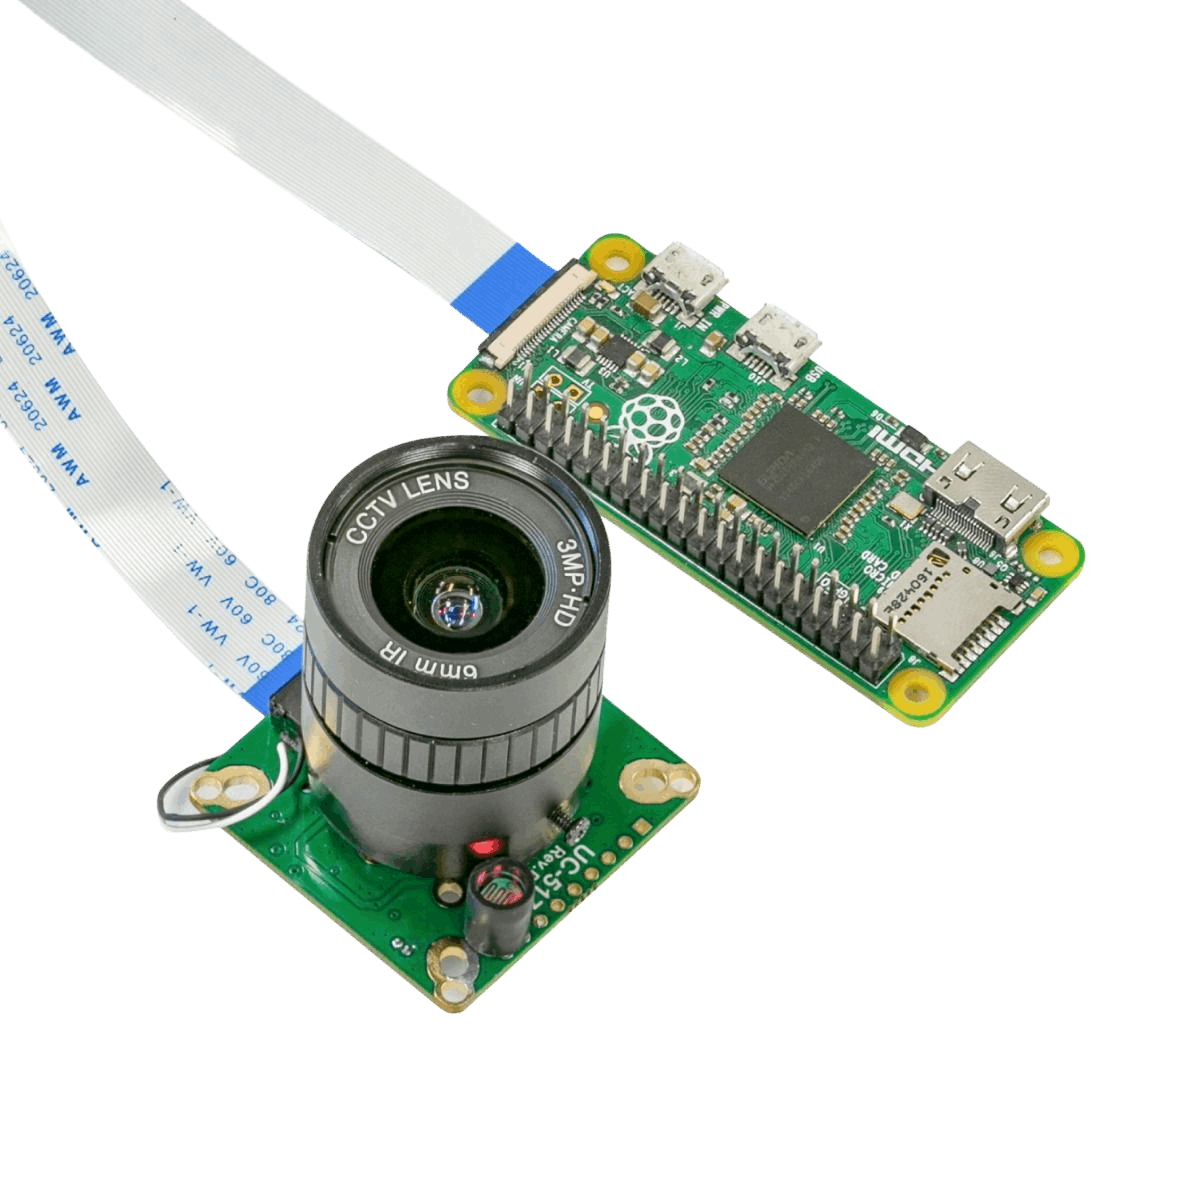 Arducam B0240 camera module connected to Raspberry Pi Zero